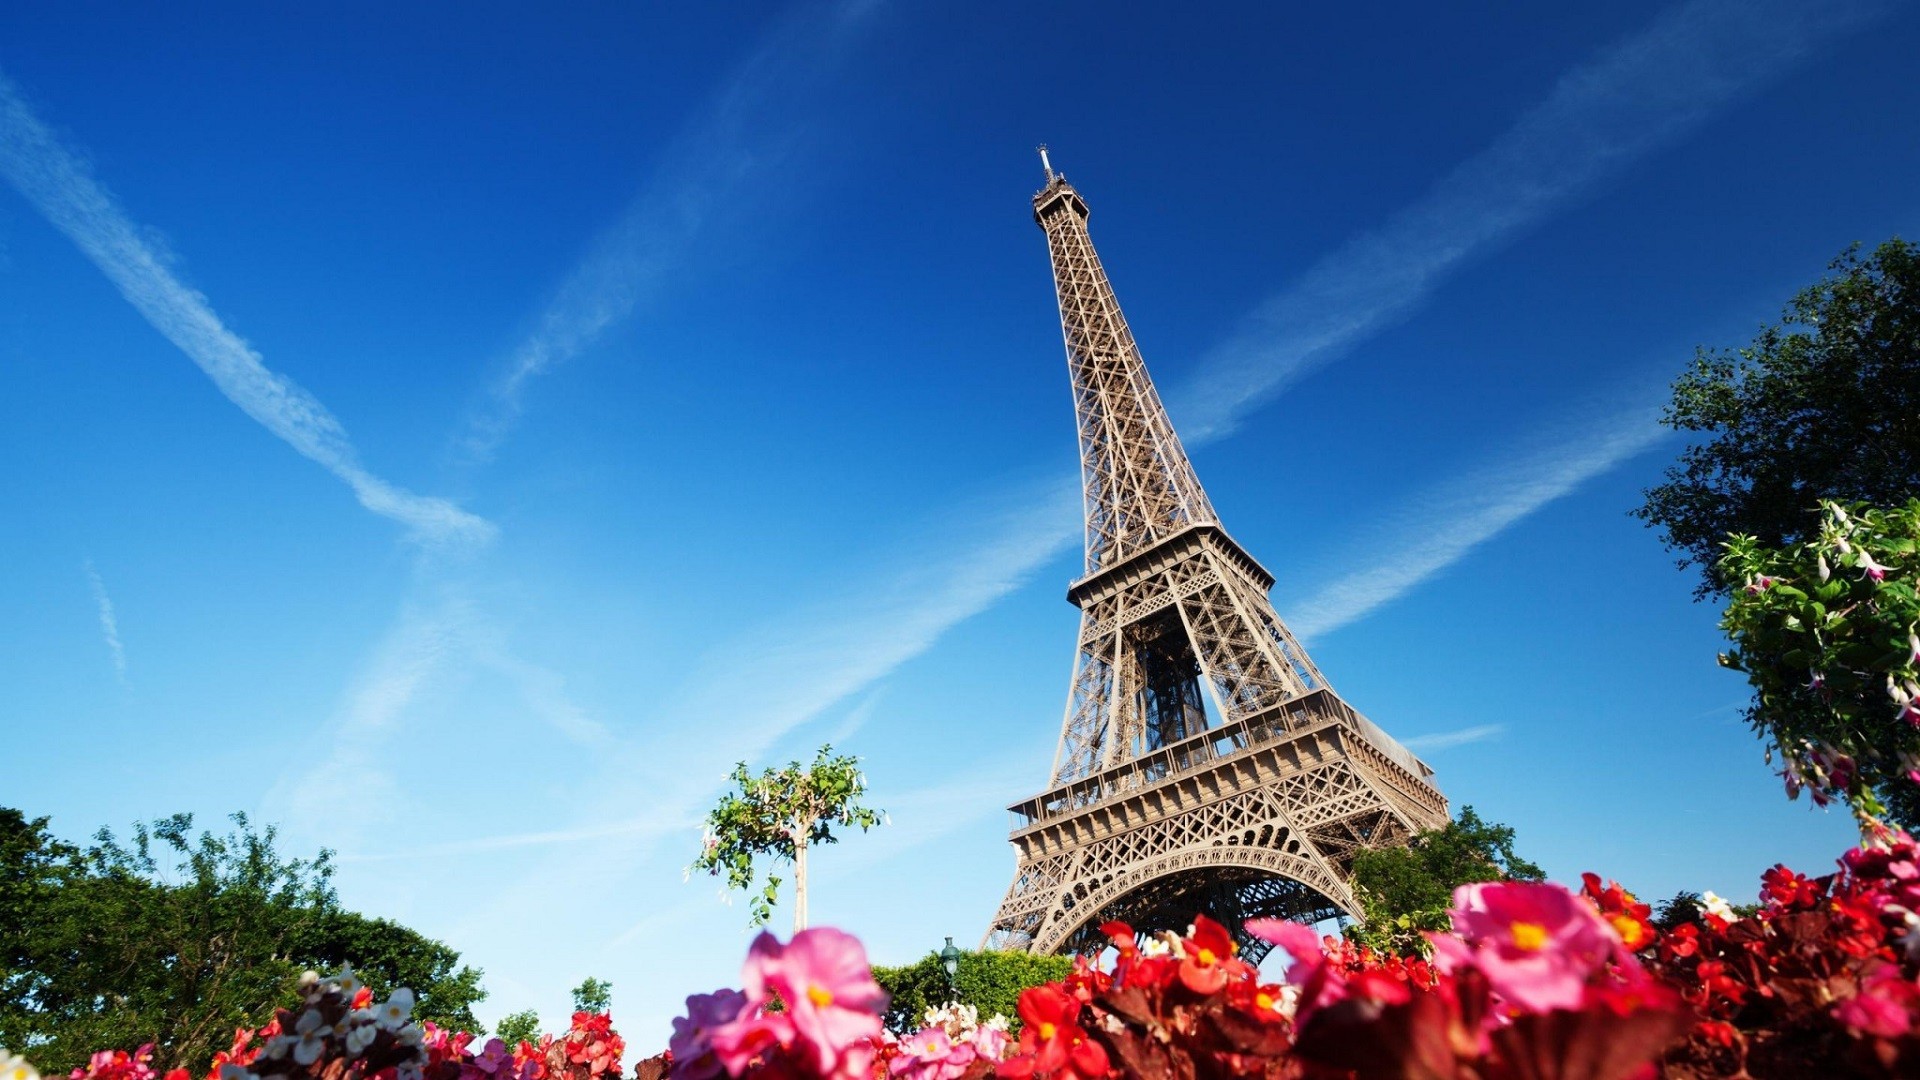 General 1920x1080 Eiffel Tower building architecture flowers Paris France low-angle sky landmark Europe